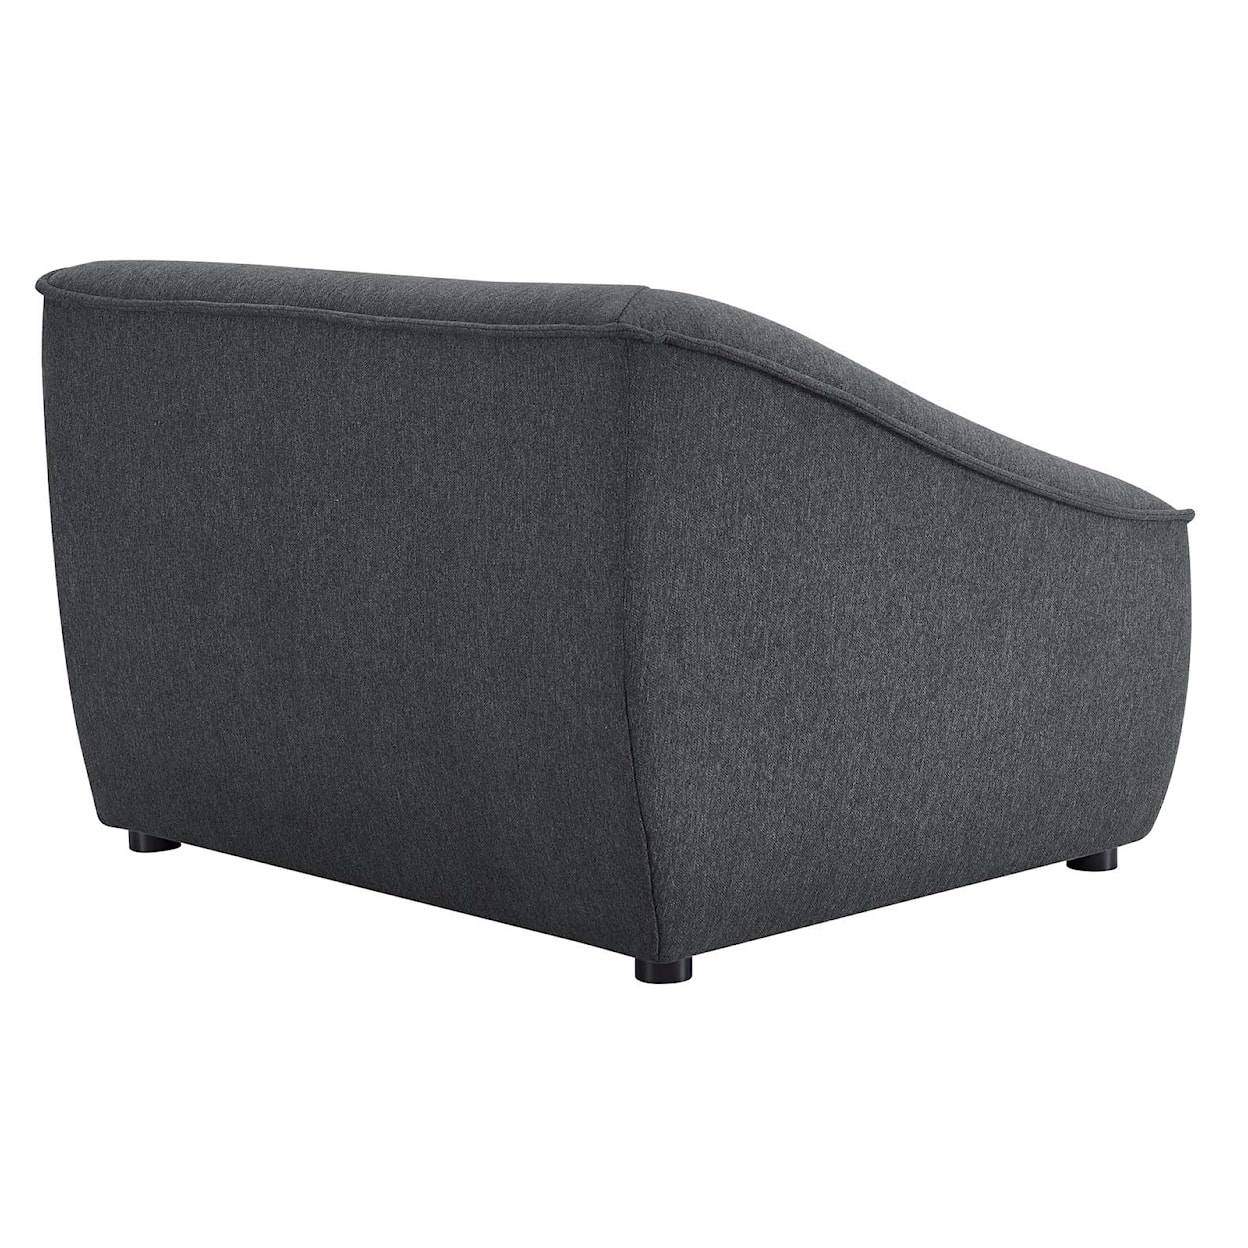 Modway Comprise 5-Piece Sectional Sofa